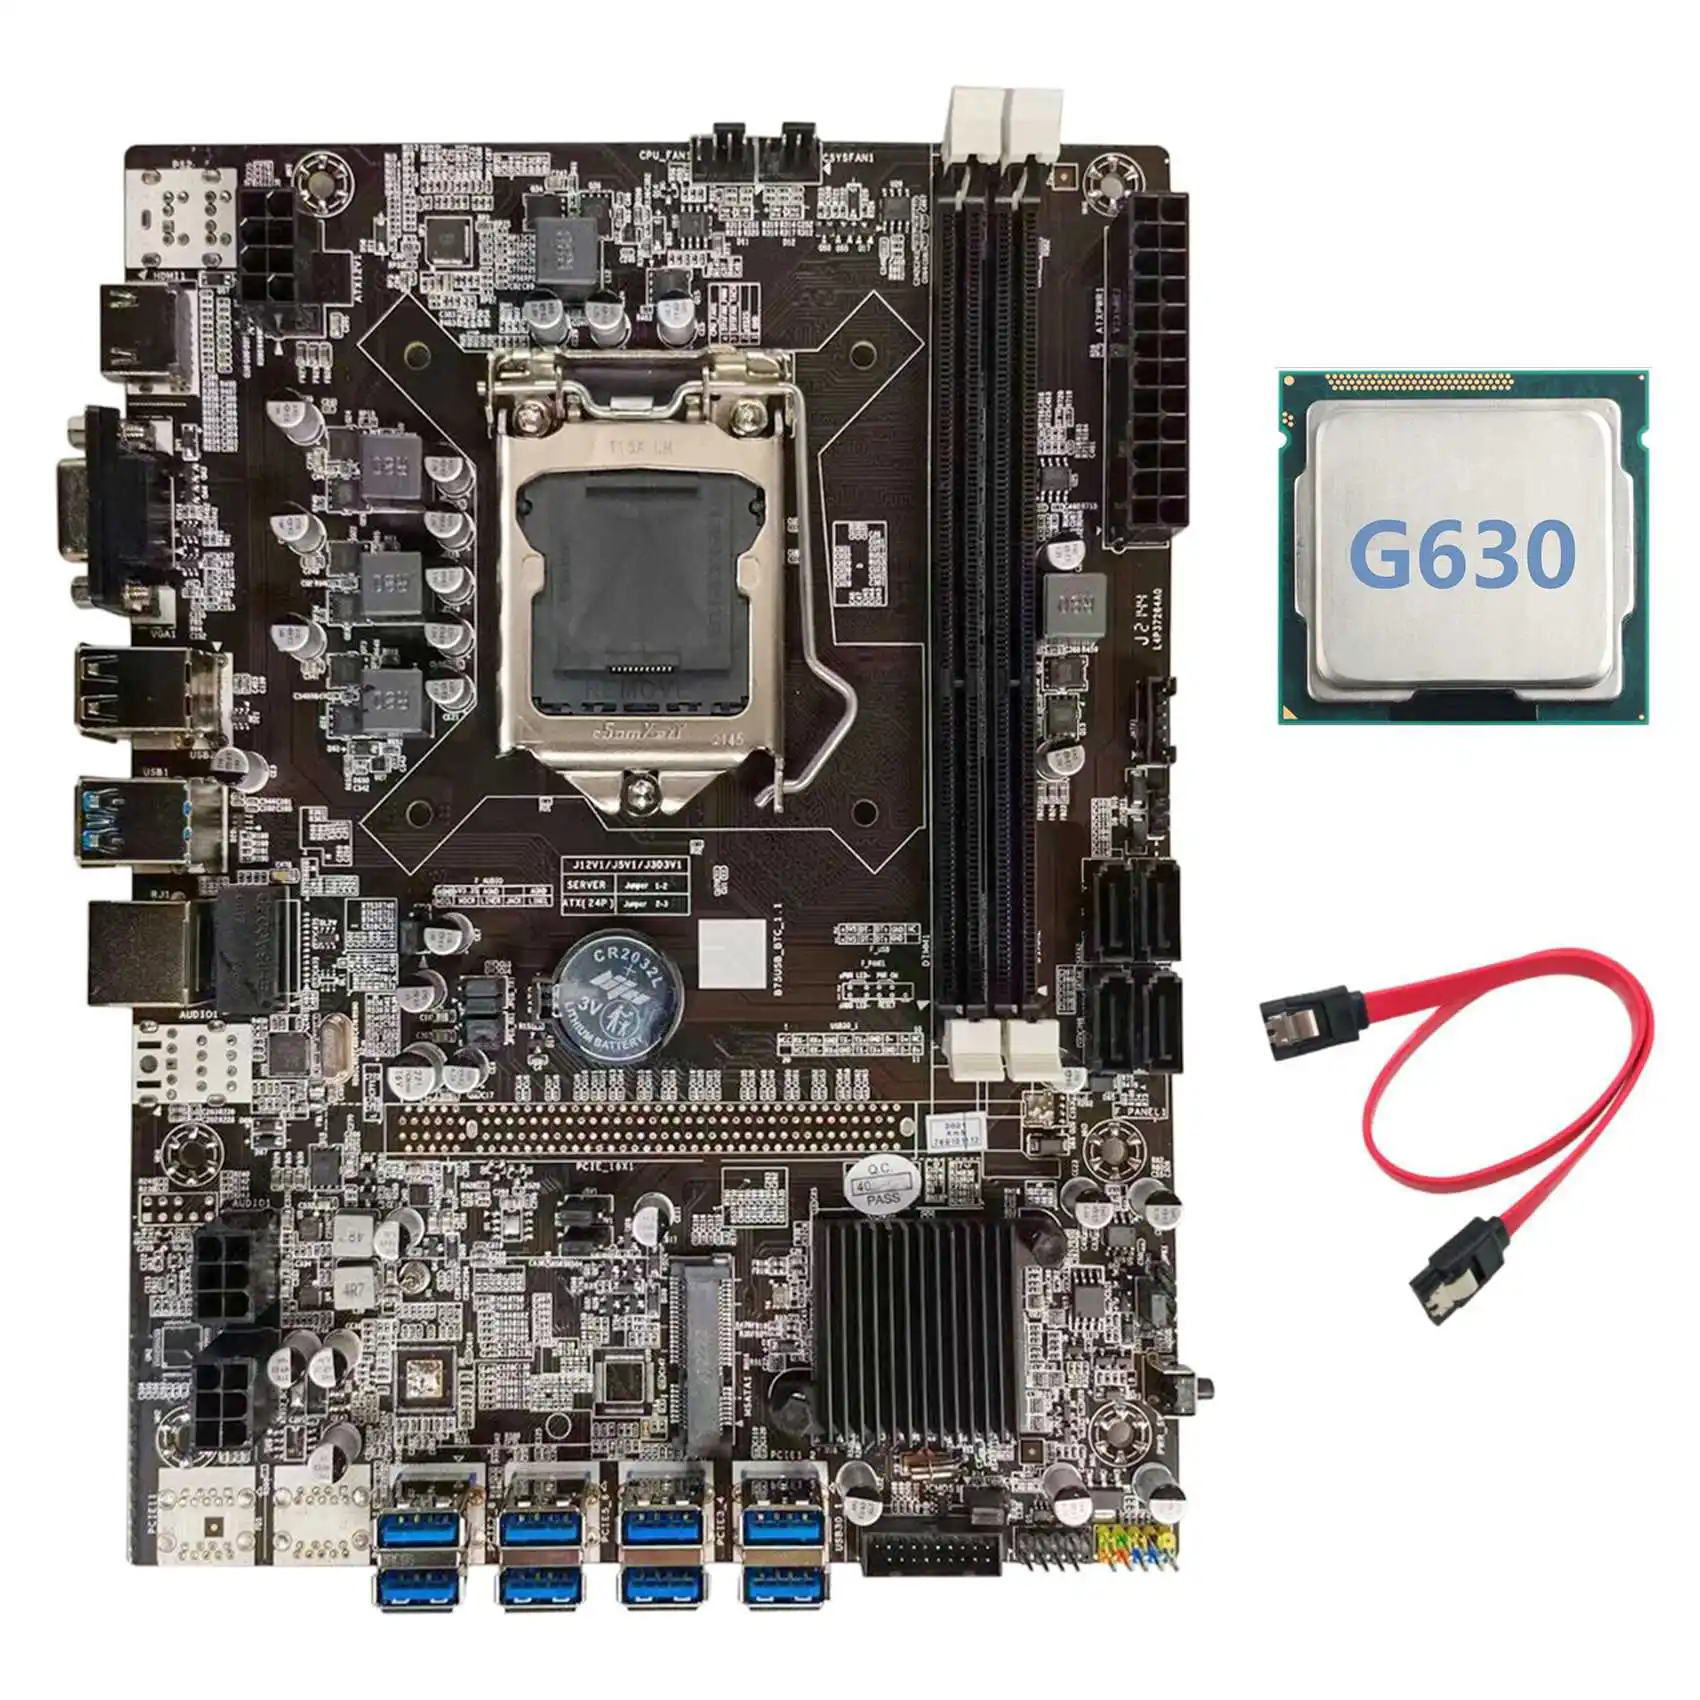 

Материнская плата B75 для майнинга BTC + процессор G630 + кабель SATA LGA1155 8xpcie USB адаптер DDR3 MSATA B75 USB Майнер материнская плата